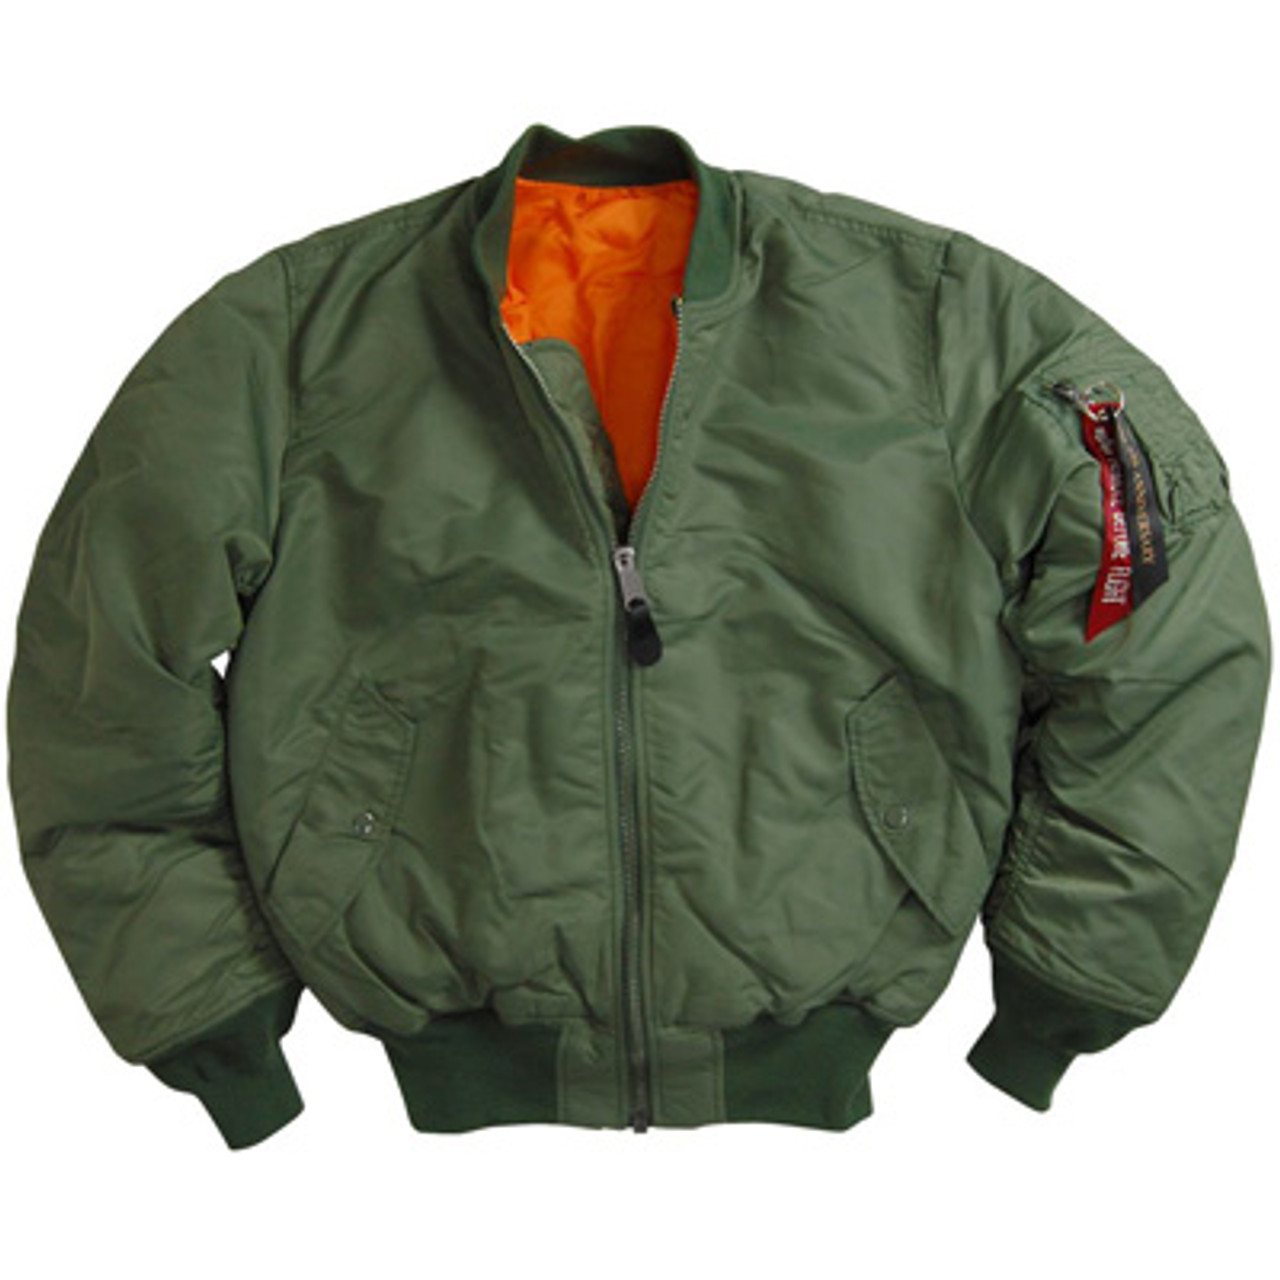 Shop Alpha Sage Green MA-1 Flight Jackets - Fatigues Army Navy Gear